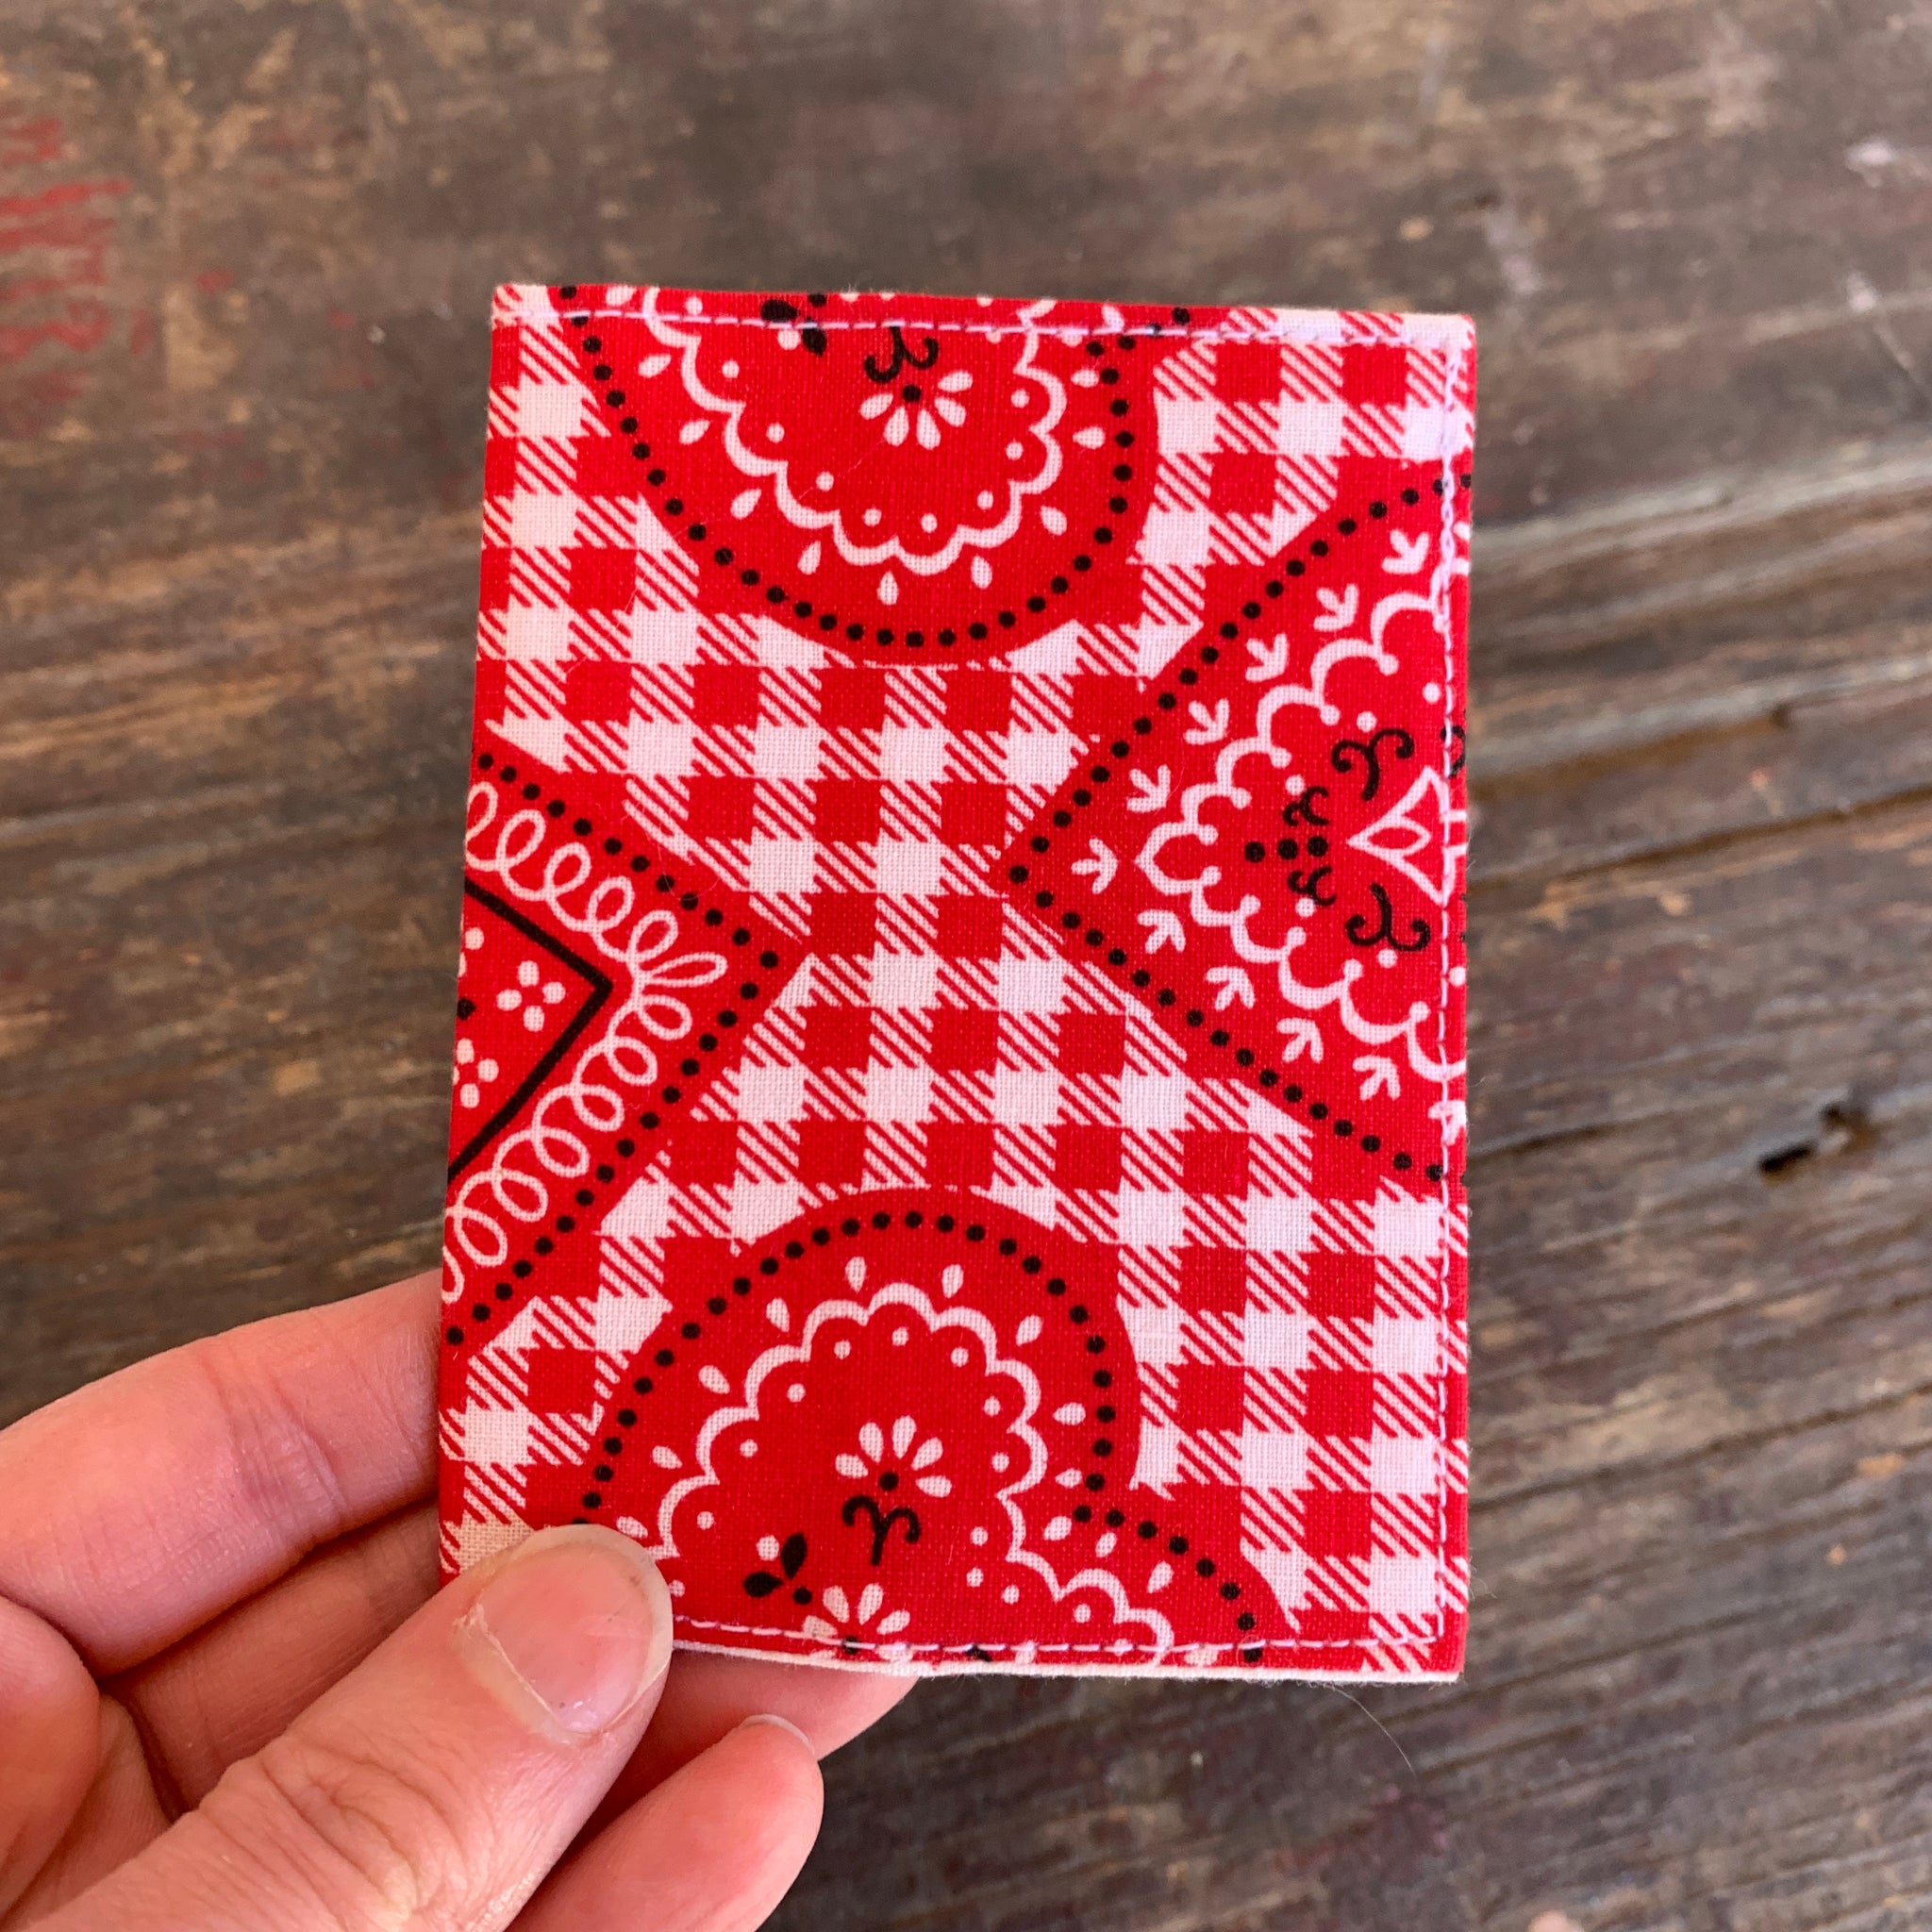 Gingham hearts handmade vintage fabric wallet